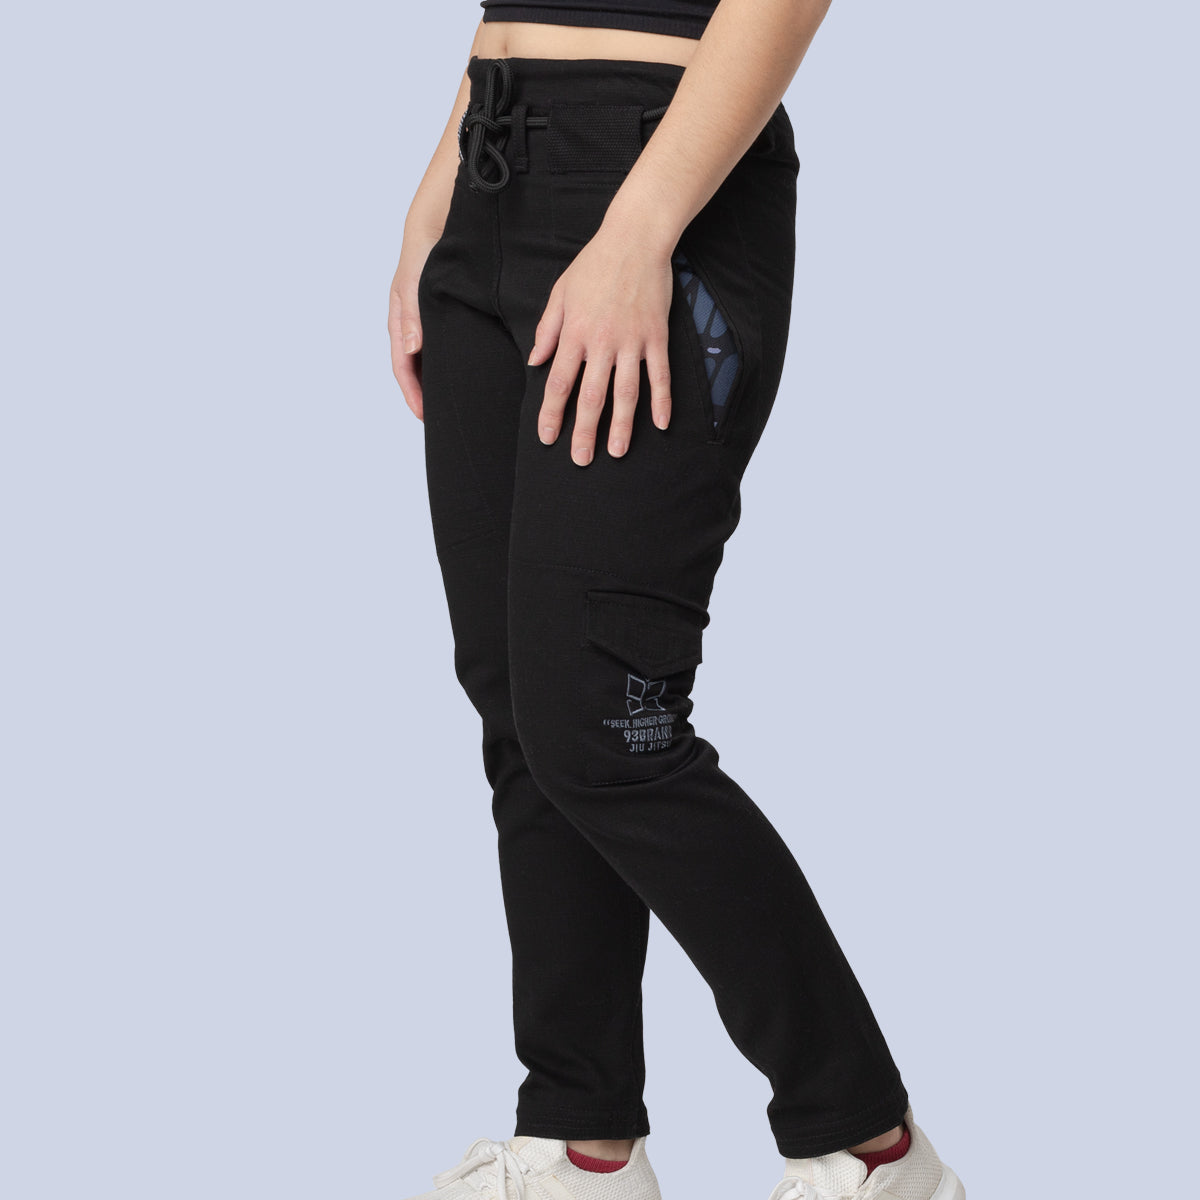 93brand Butterfly Originals Women's Casual Gi Pants - Black